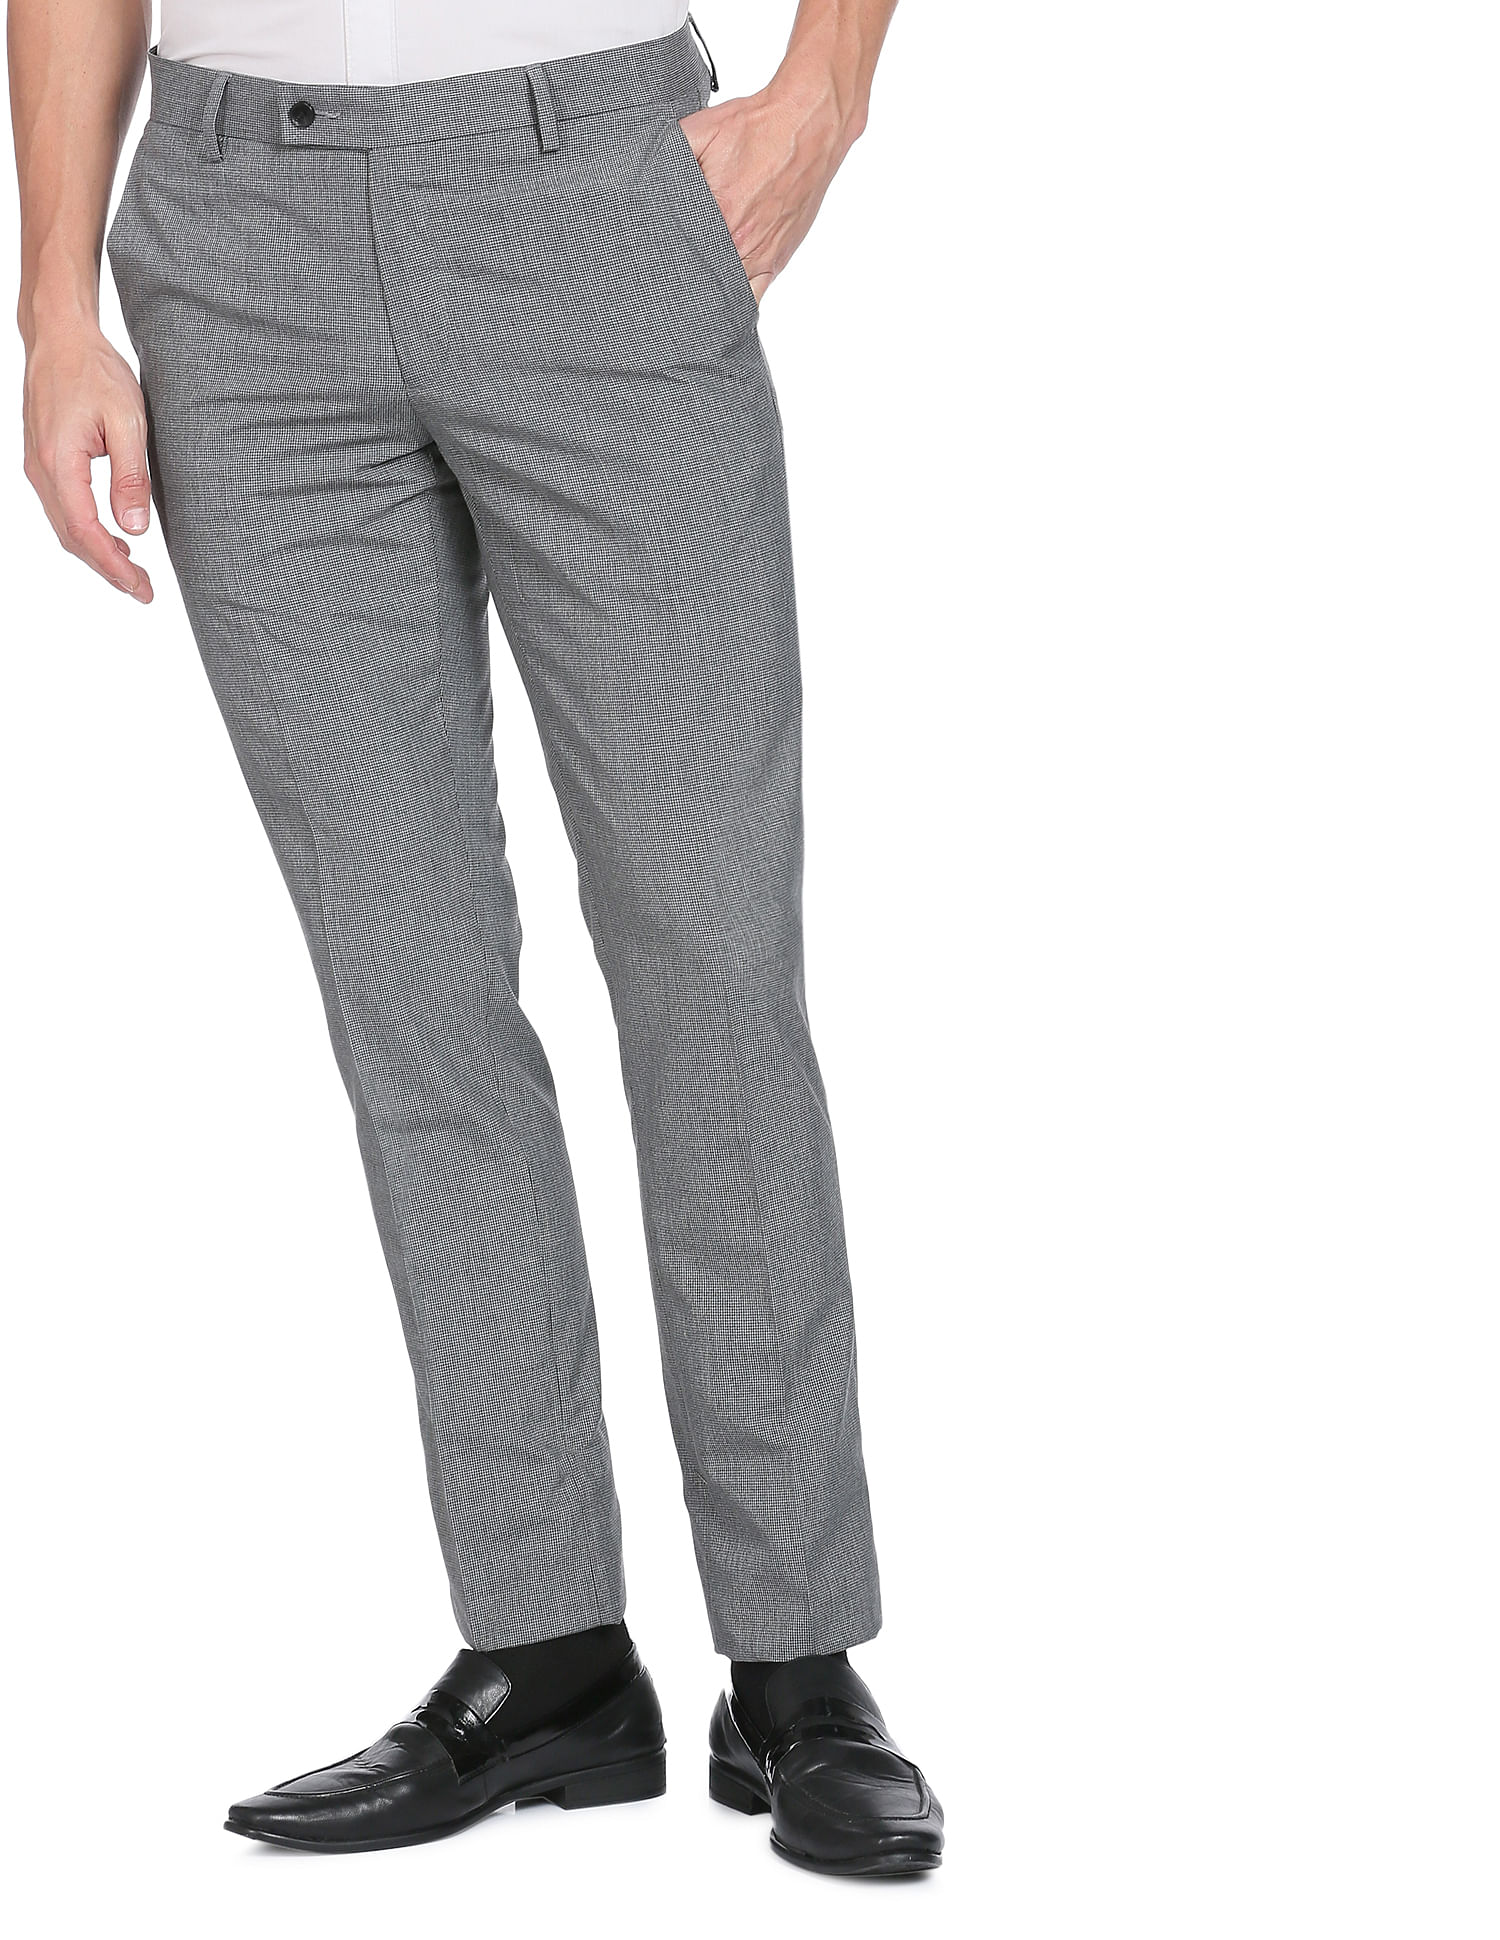 Buy Arrow Twill Autoflex Formal Trousers Grey online